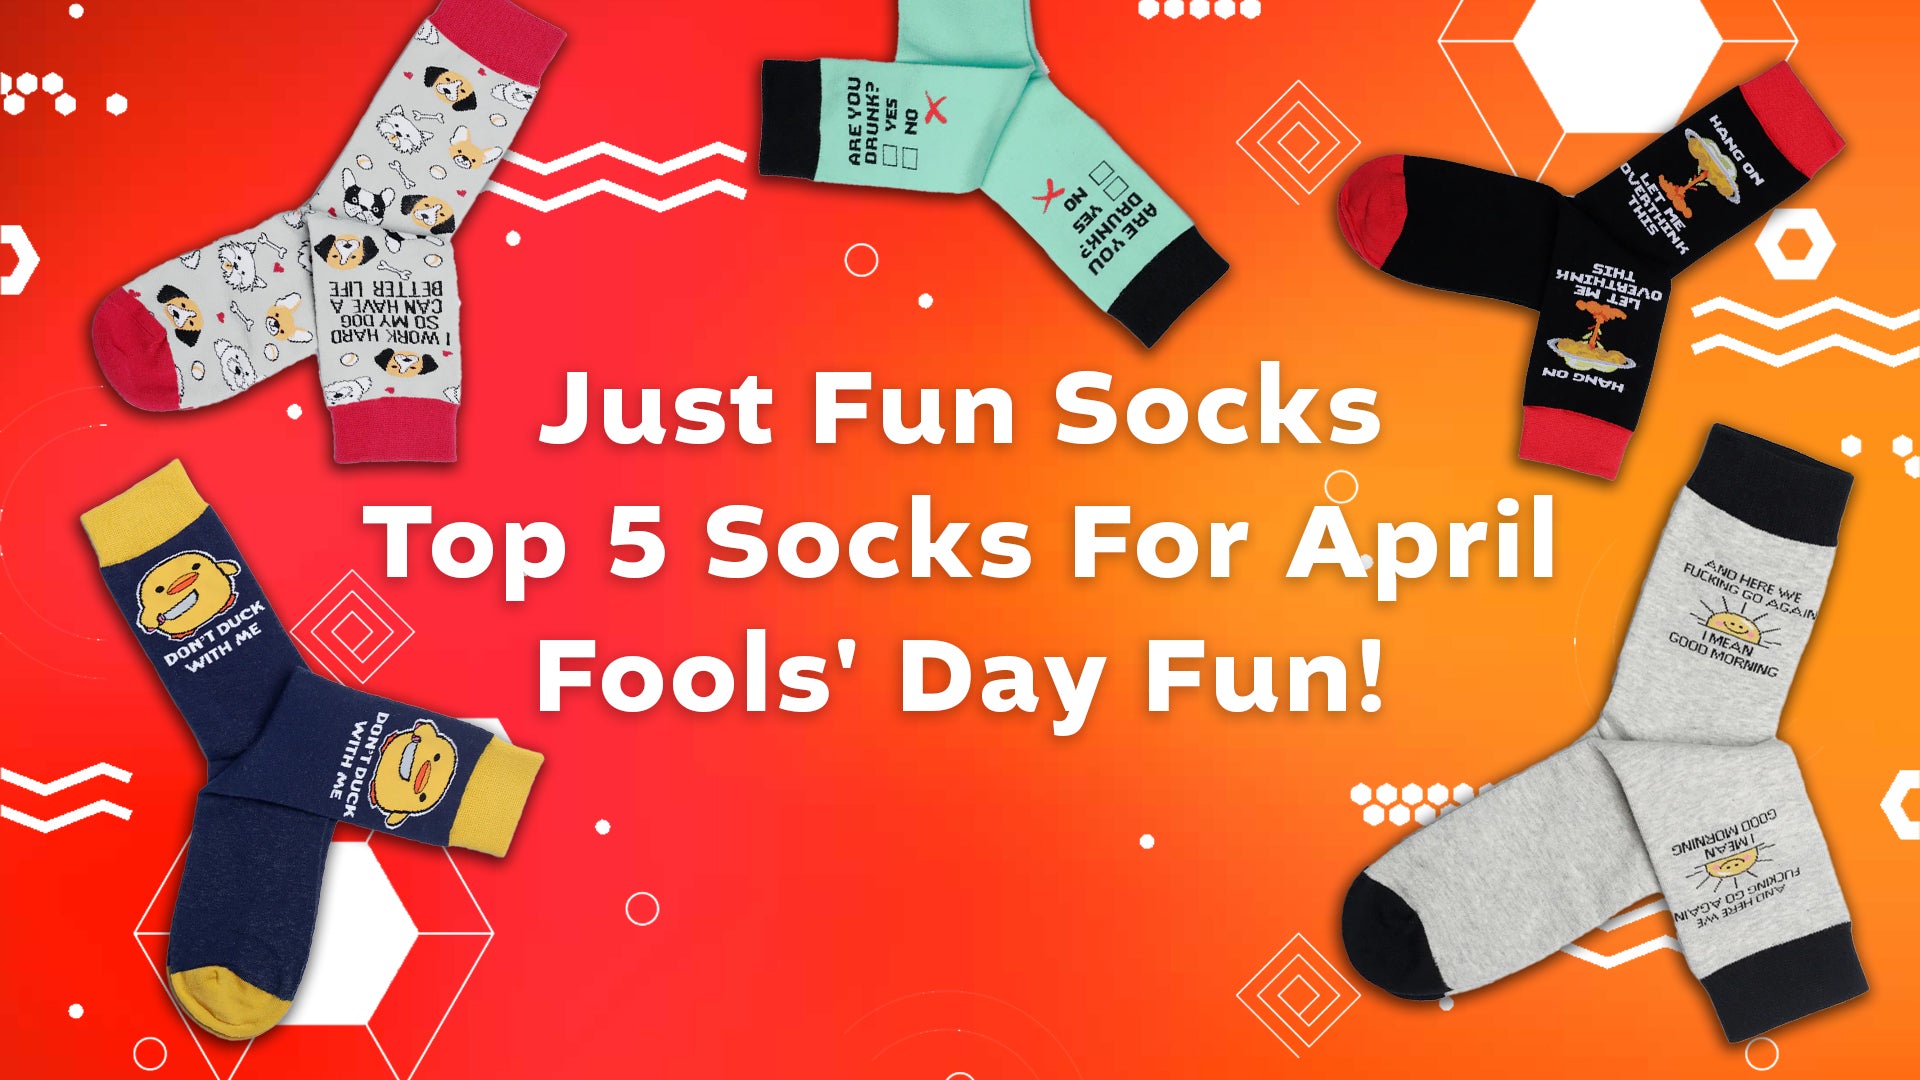 Just Fun Socks Top 5 Socks For April Fools' Day Fun!